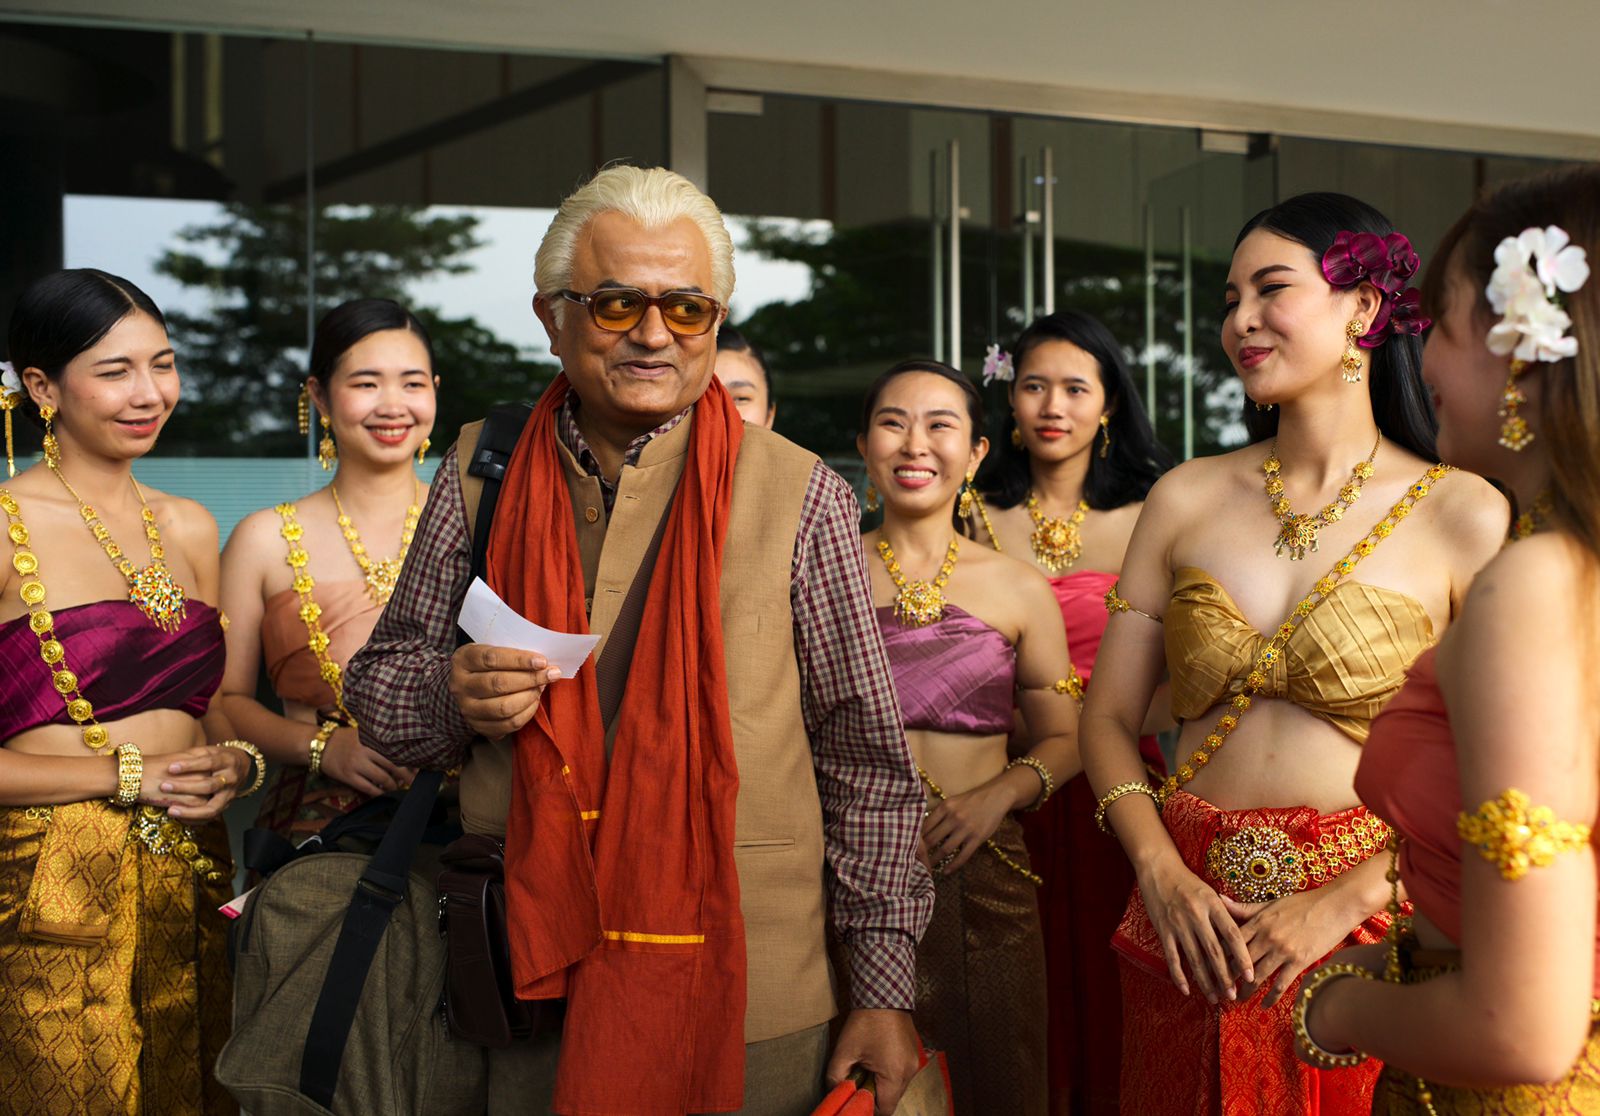 “Iske pehle ki meri photo pe mala tang jaaye, ek baar karna hai…” says Gajraj Rao as 70-yr-old man with erectile dysfunction in Thai Massage